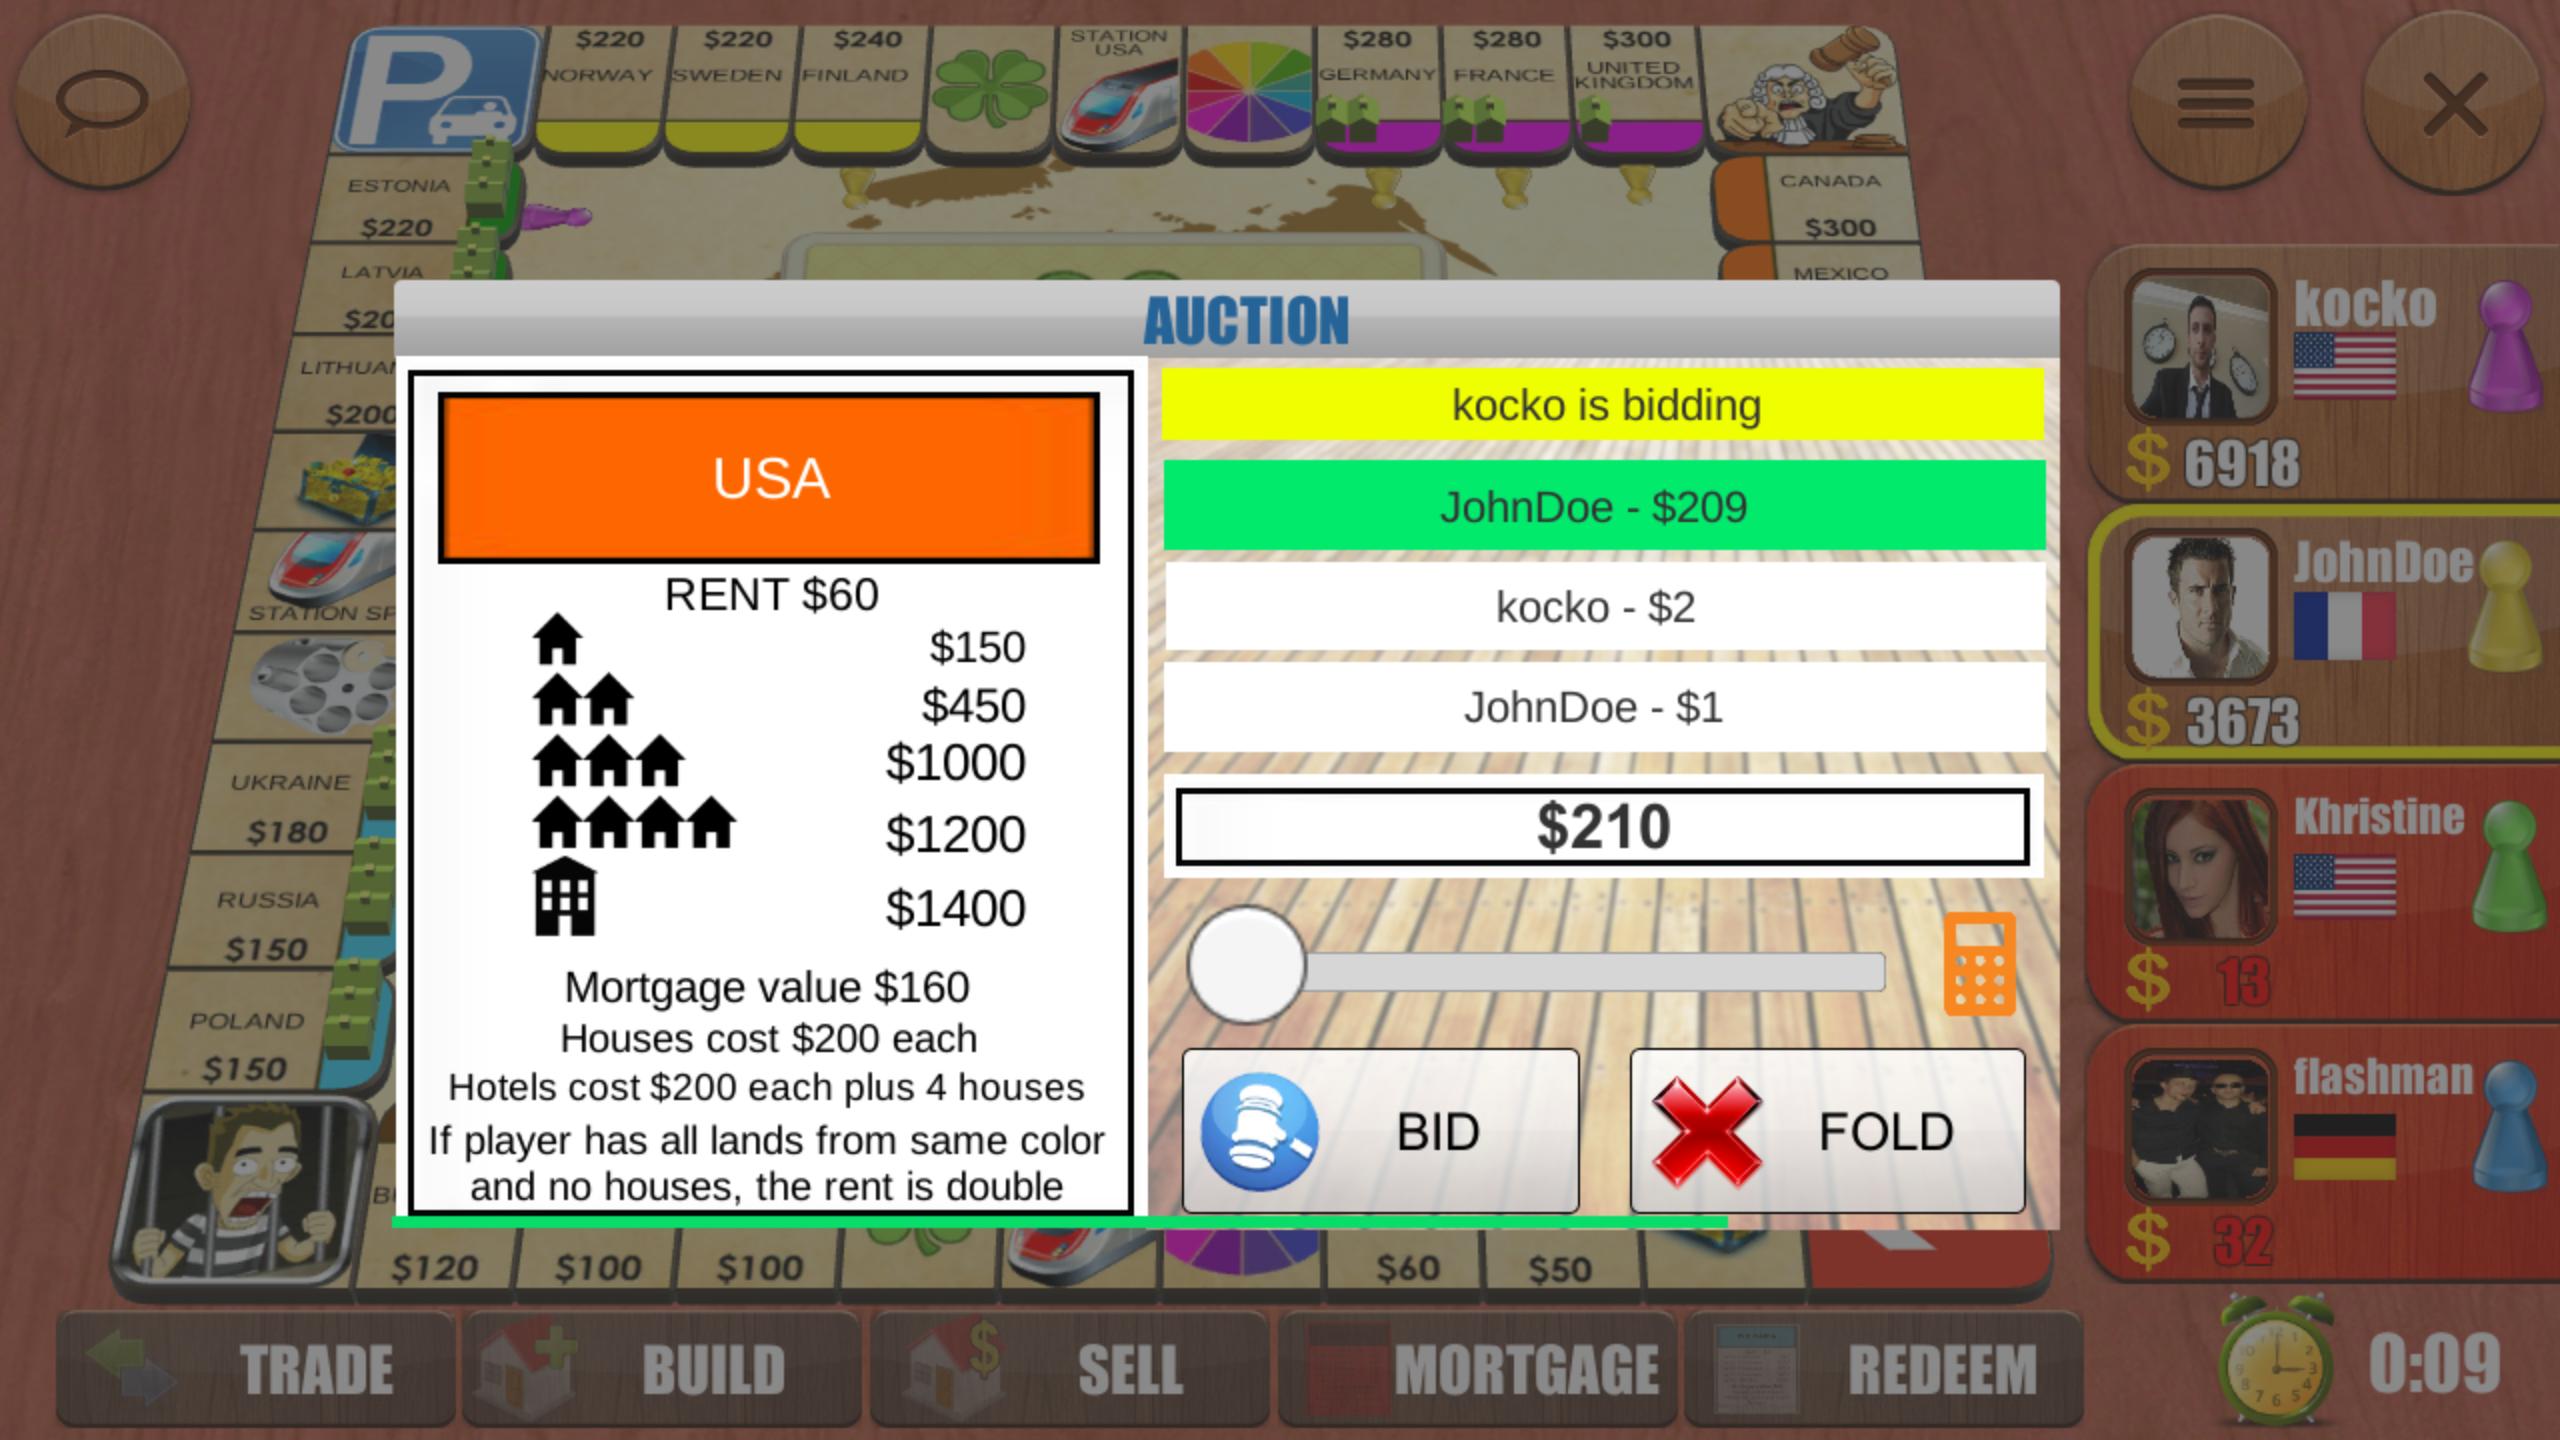 Rento Dice Board Game Online 5.1.9 Screenshot 23